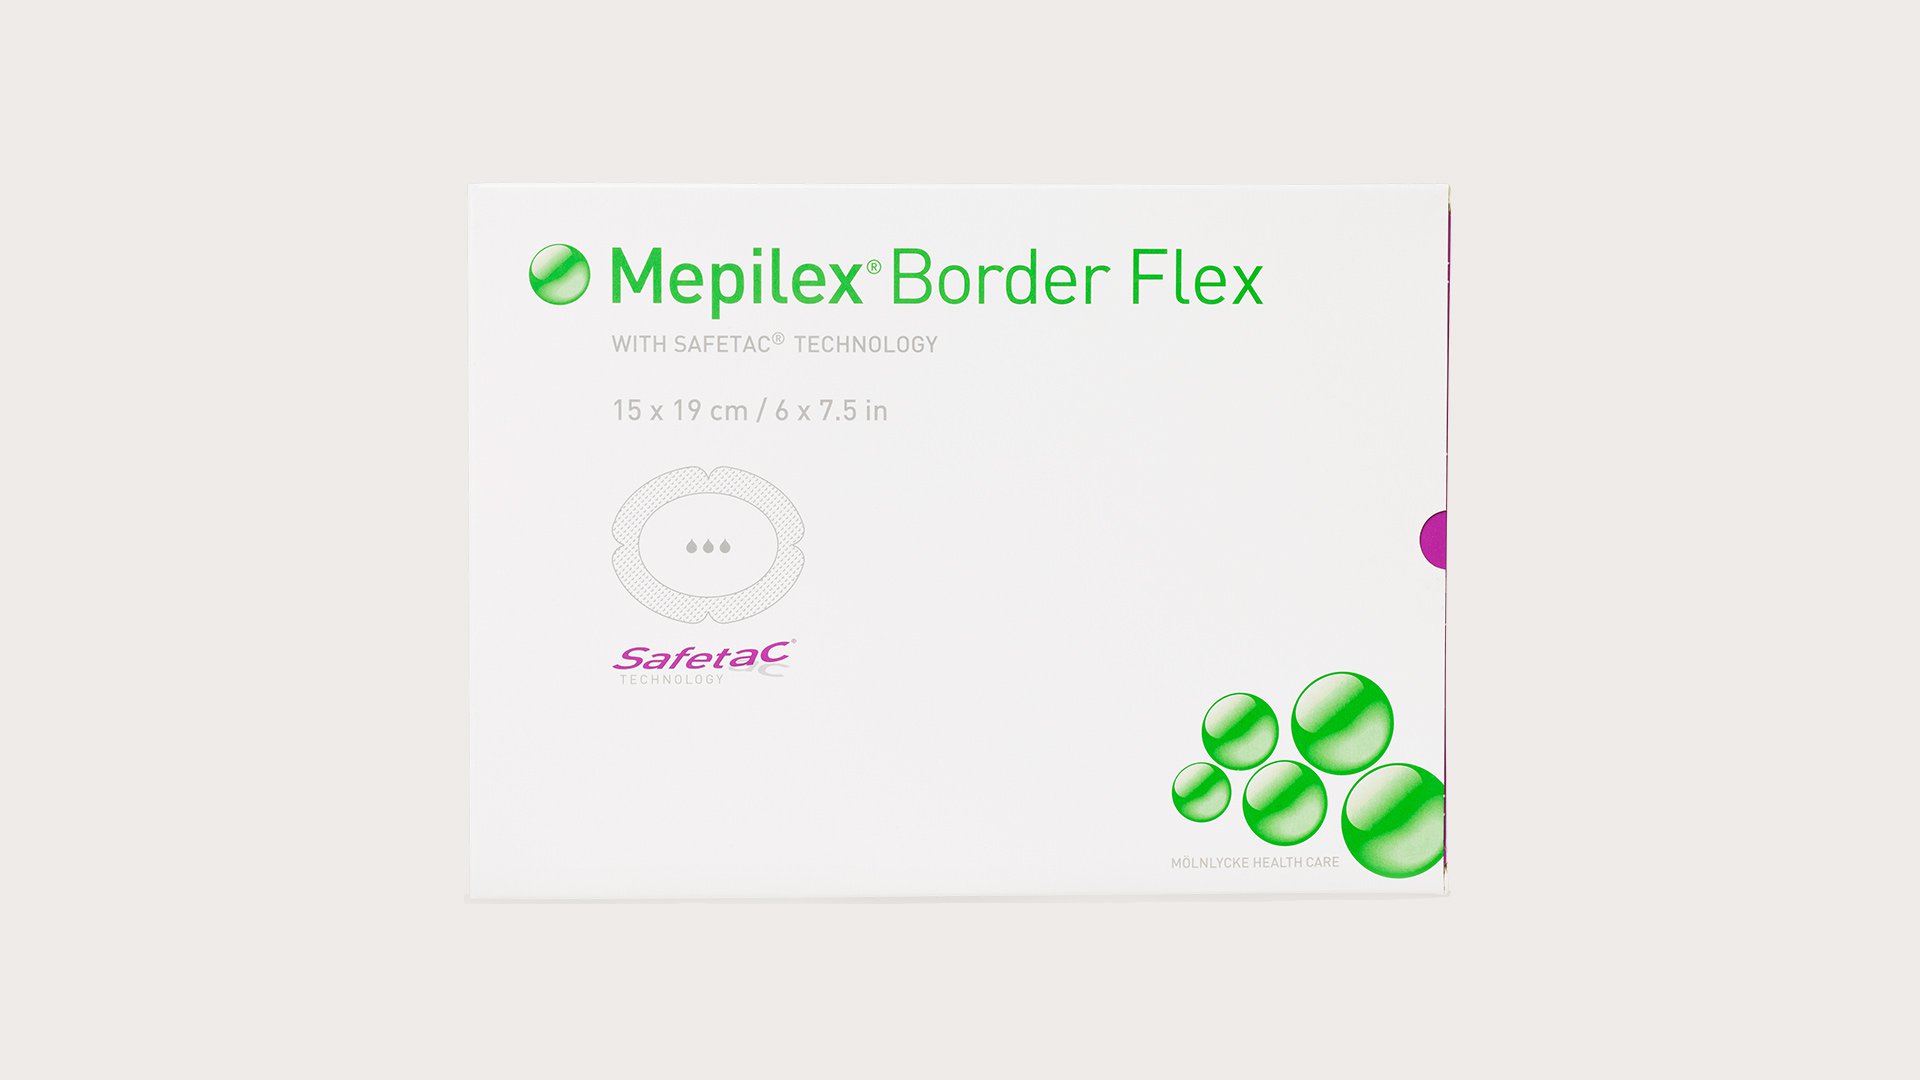 Mepilex Border Flex image